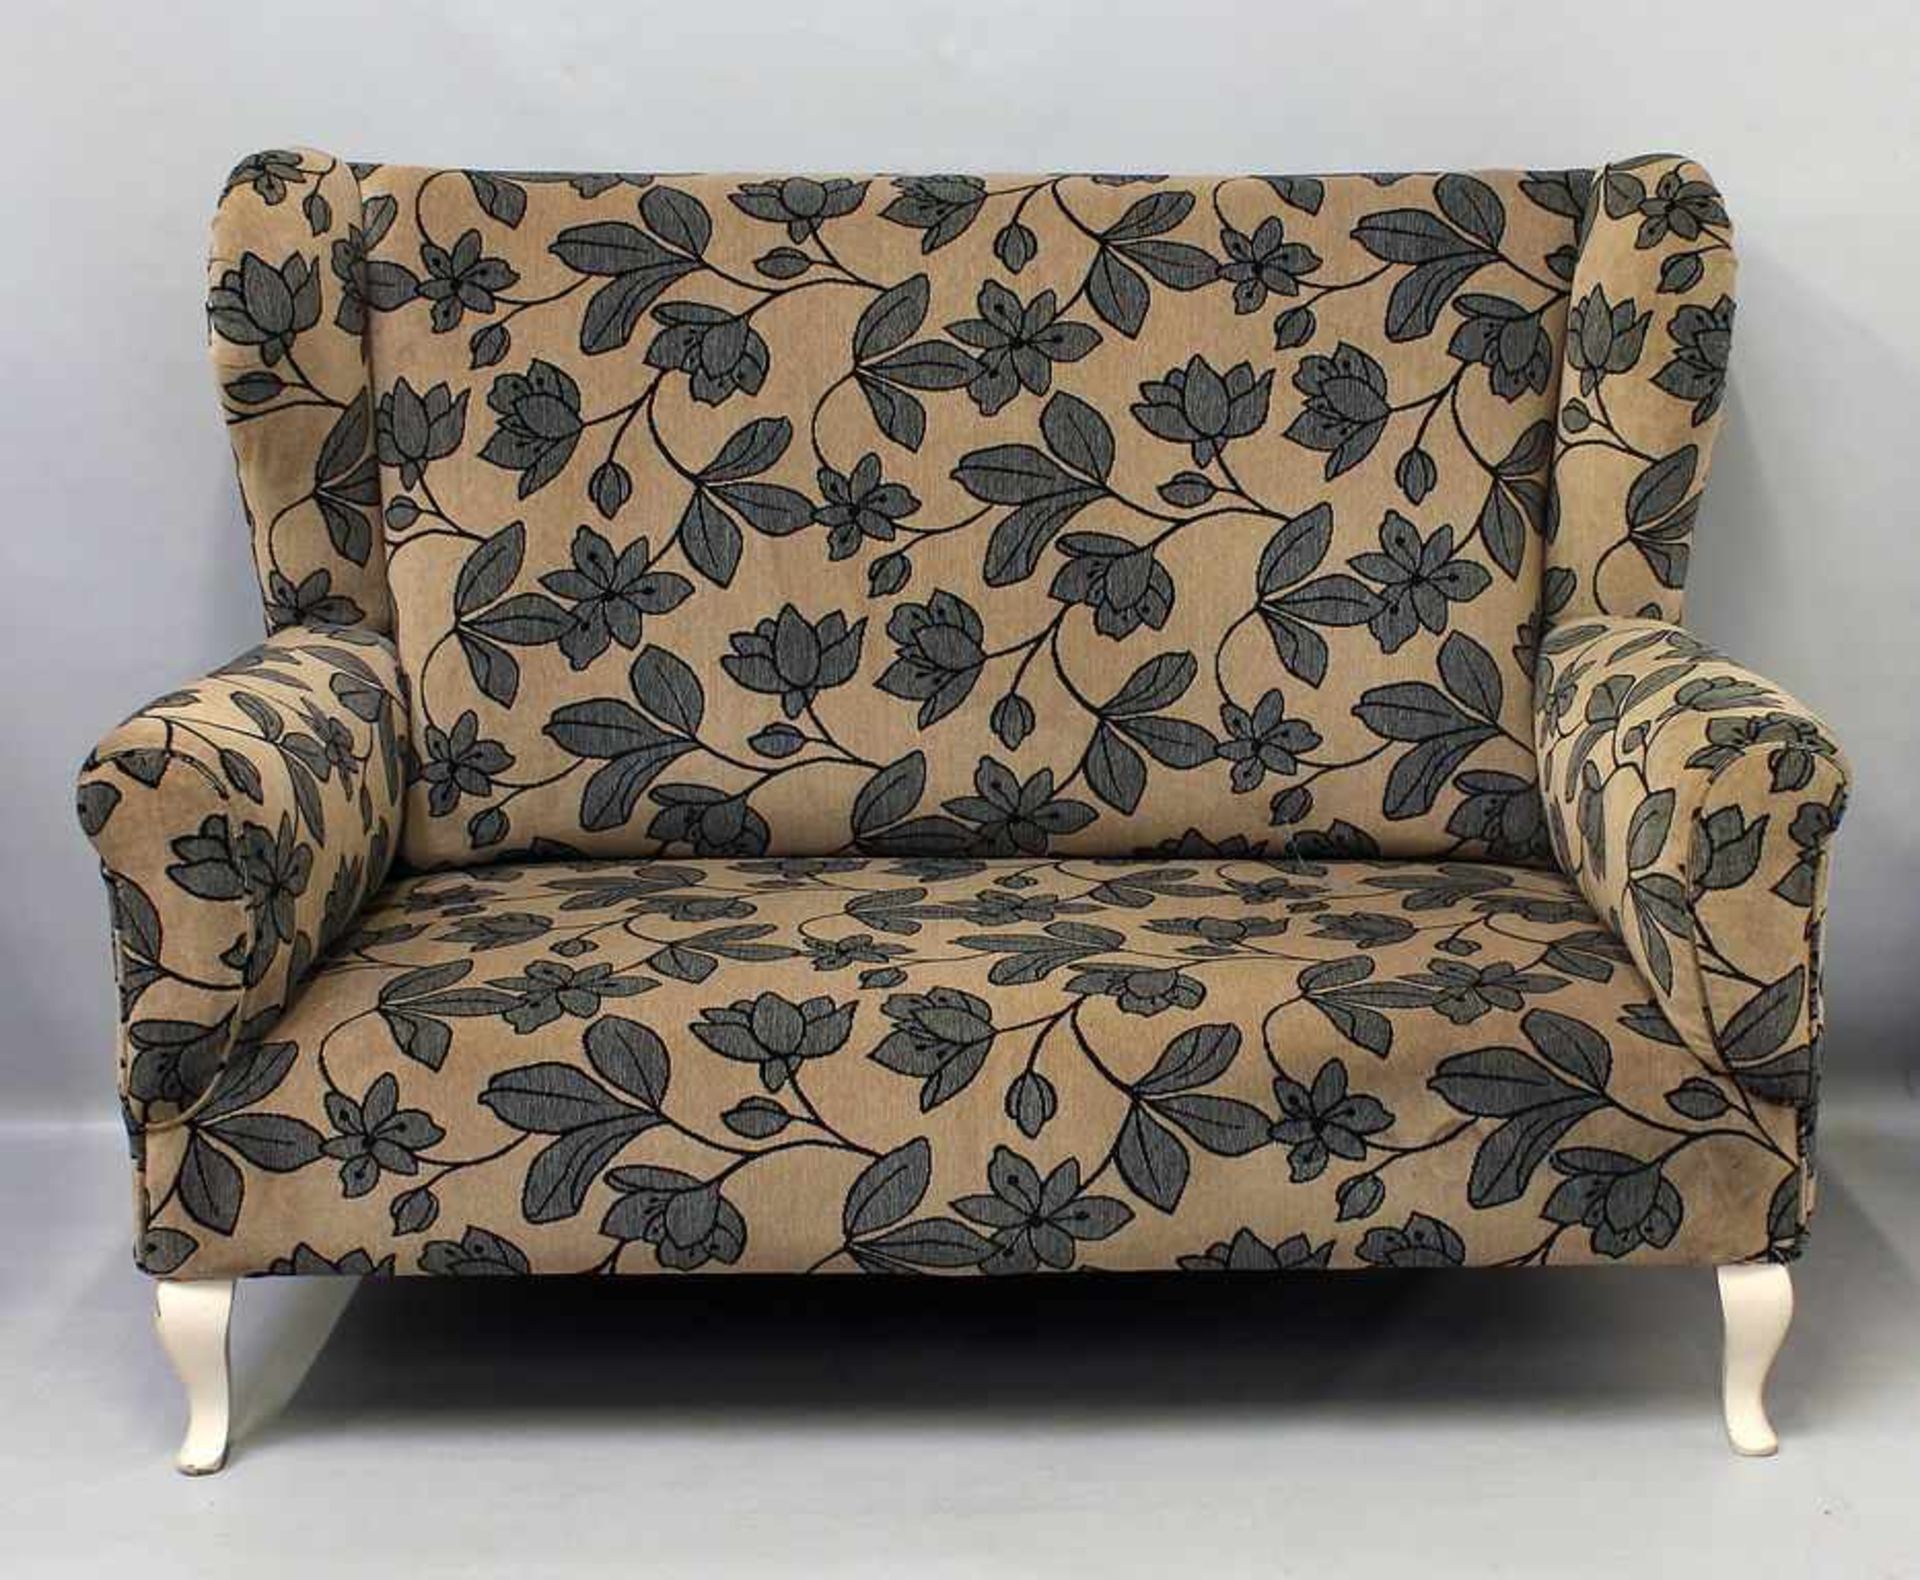 Ohrenbacken-Sofa,2-Sitzer. Gepolstertes Gestell mit polychromem Textilbezug, florales Dekor.